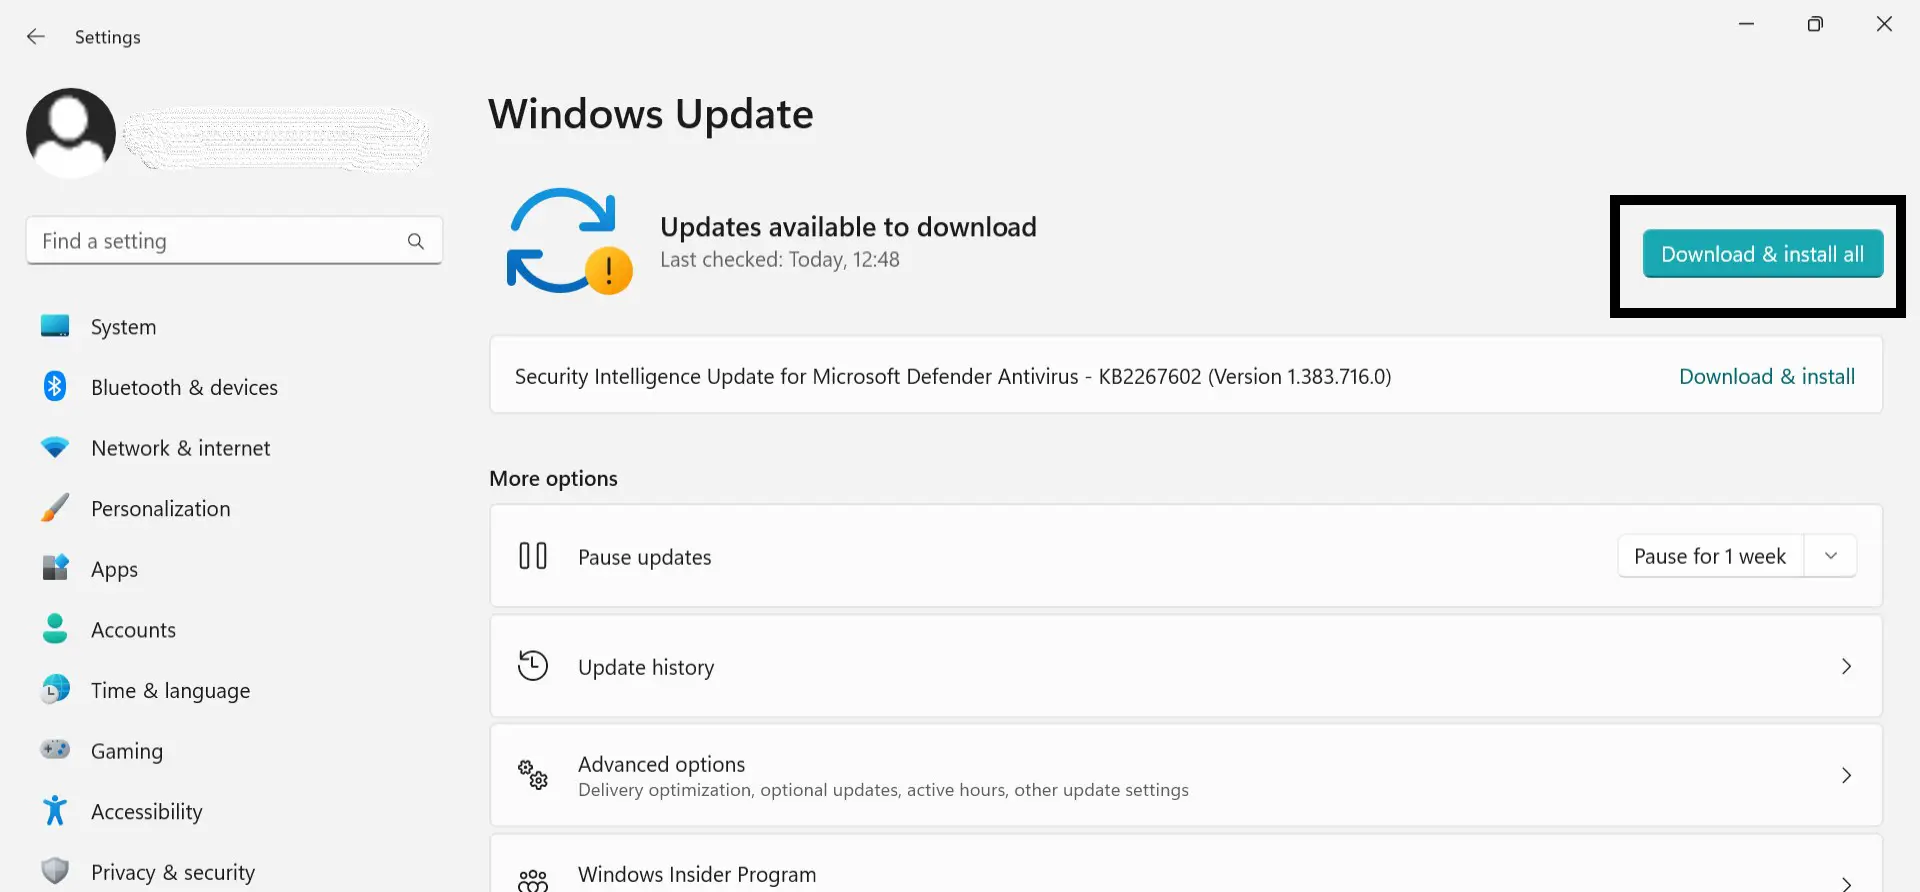 Windows update to fix no sound output pronlems